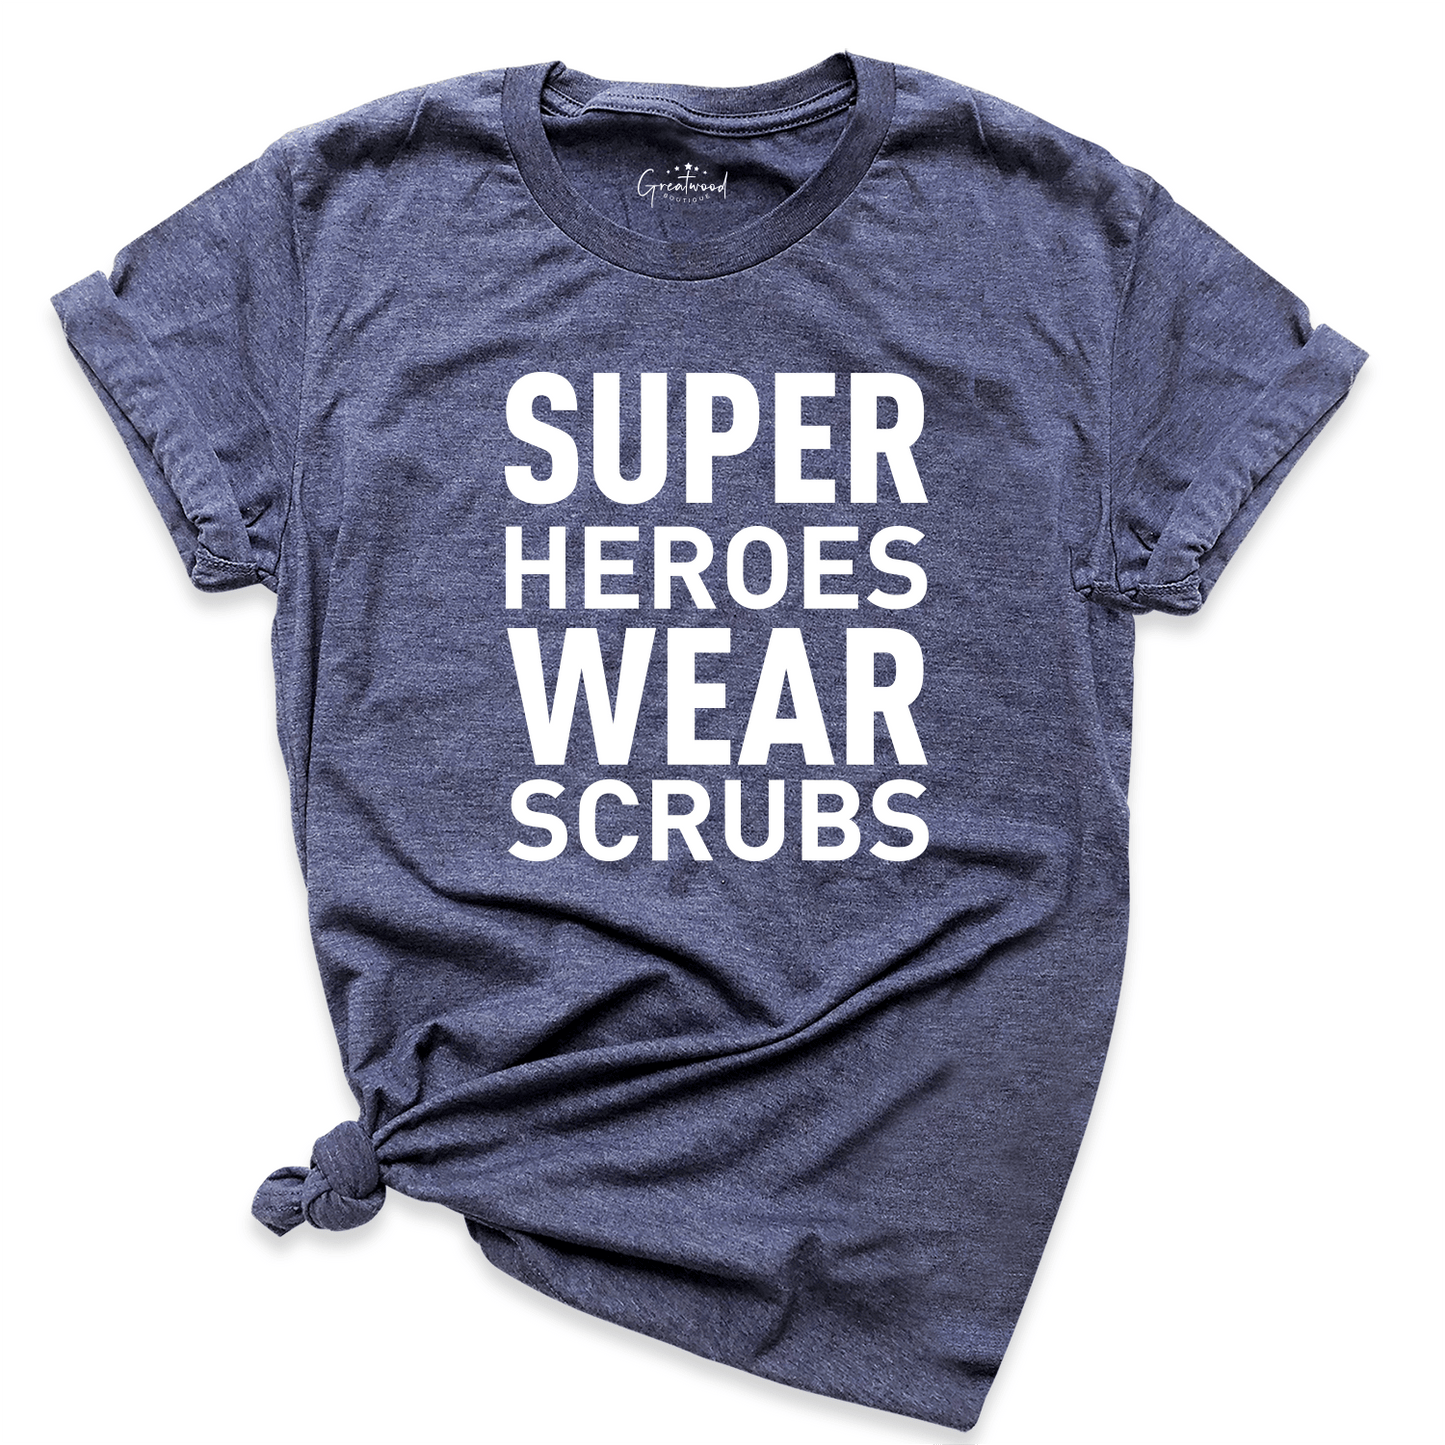 Super Hero Wears Scrubs Shirt Navy - Greatwood Boutique